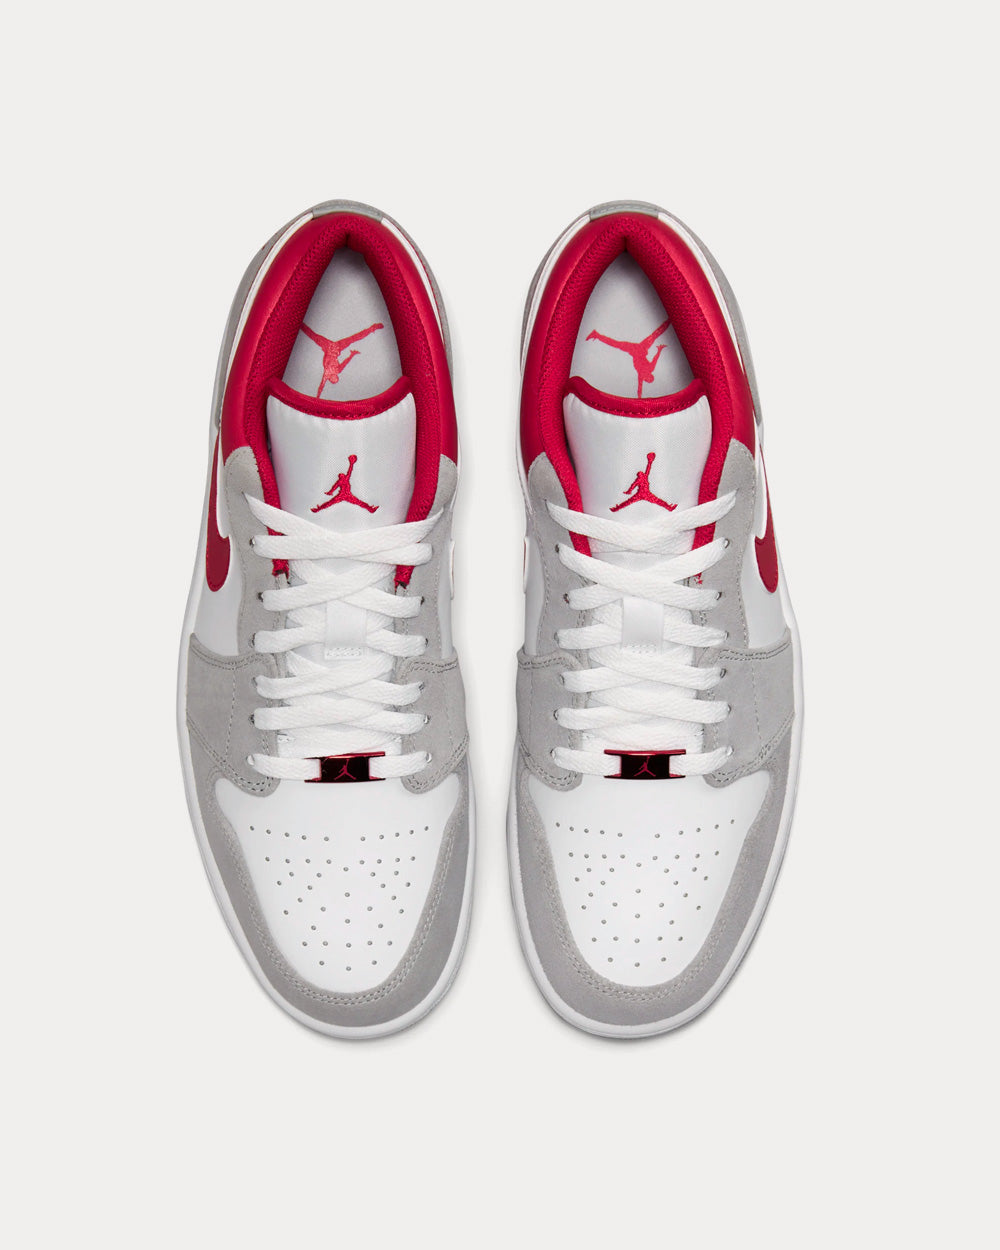 Jordan - Air Jordan 1 Low SE Light Smoke Grey / Gym Red / White Low Top Sneakers